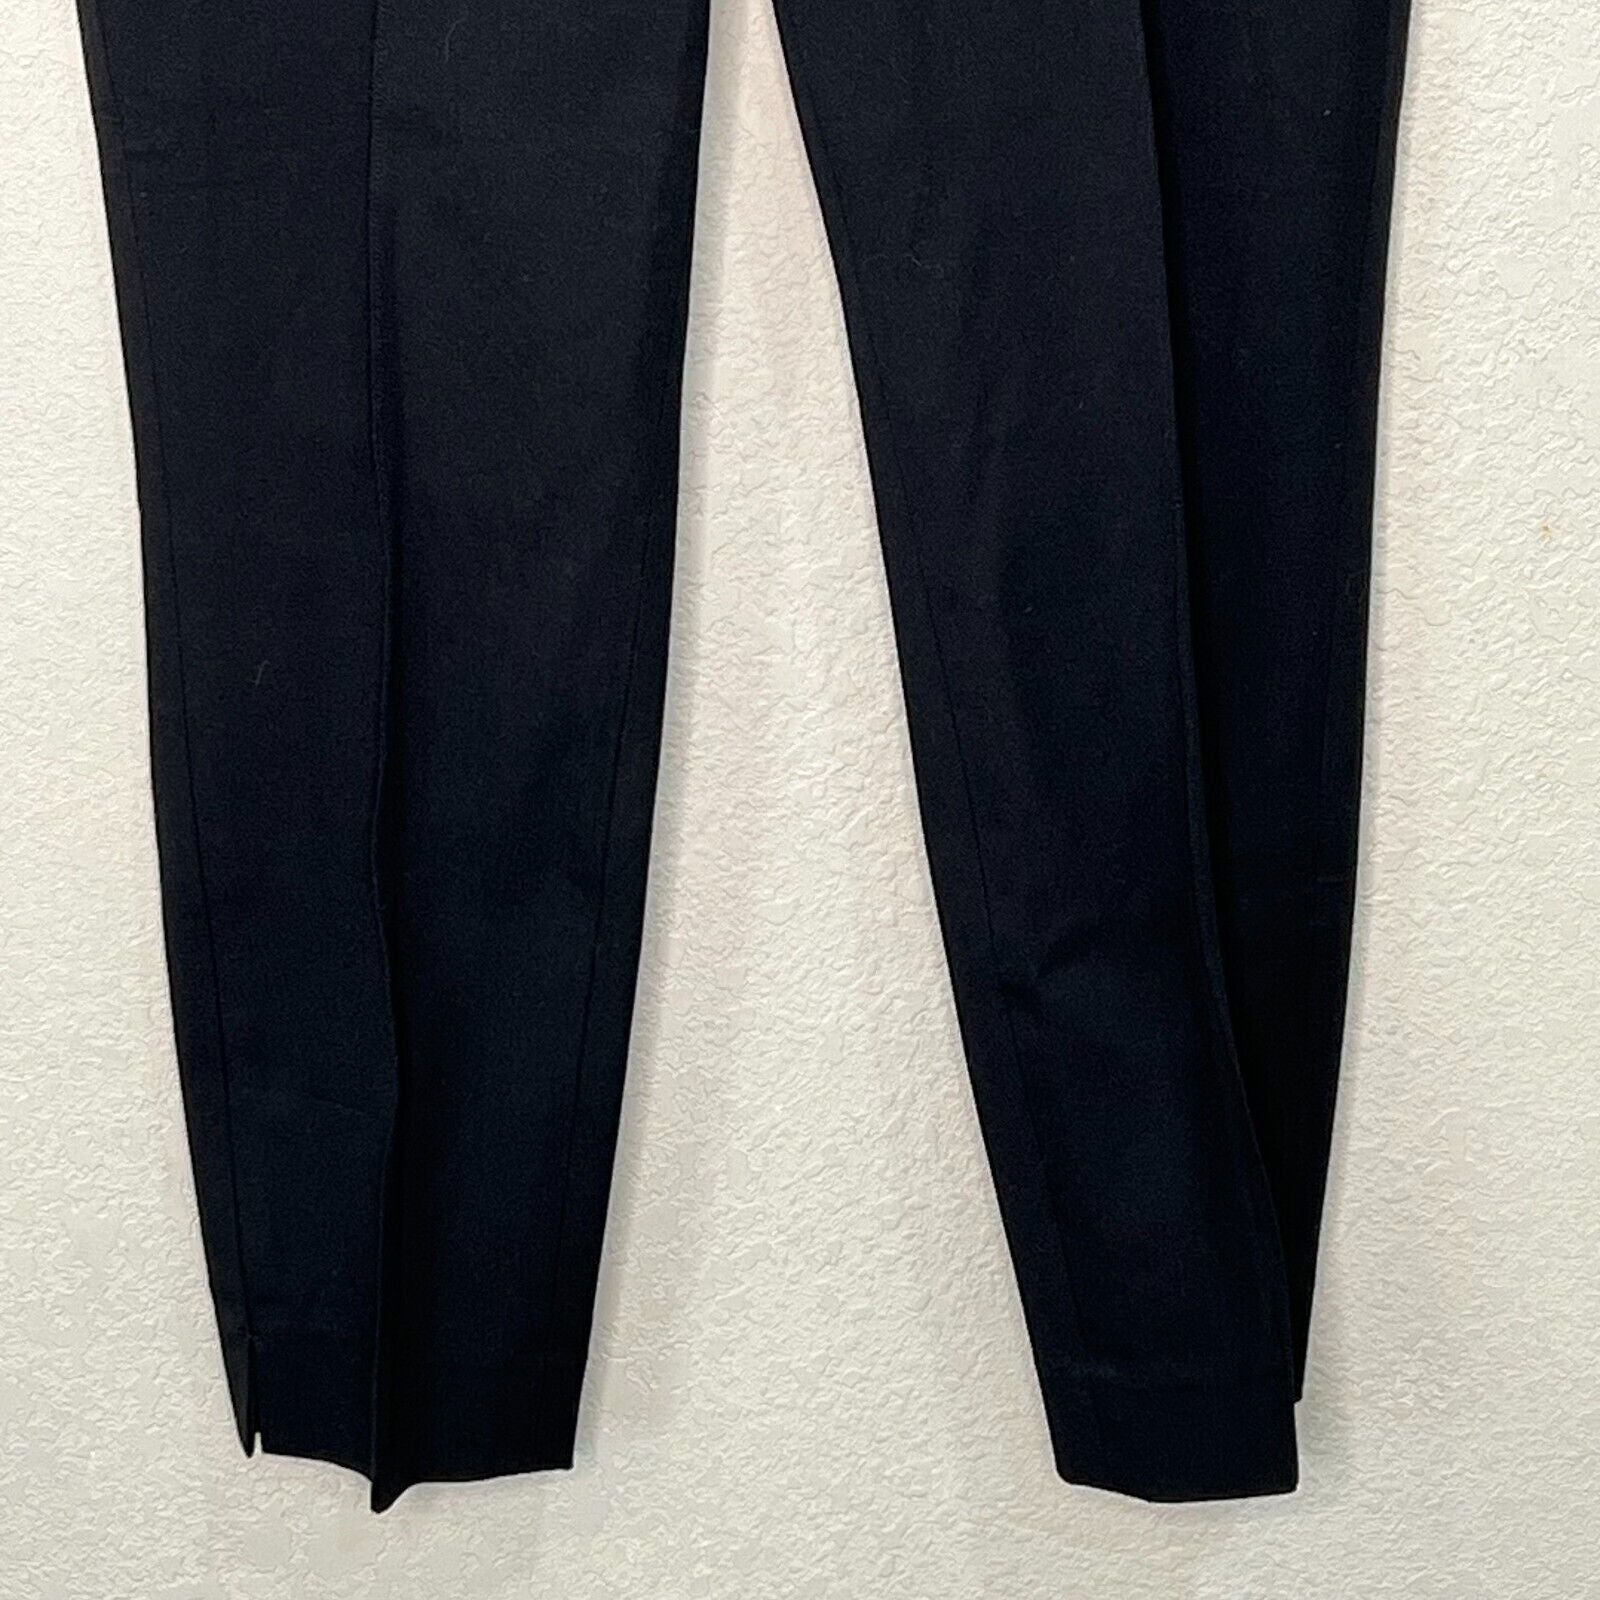 Ralph Lauren Polo Women's Black Stretch Slim Pants Size 6 NEW $198